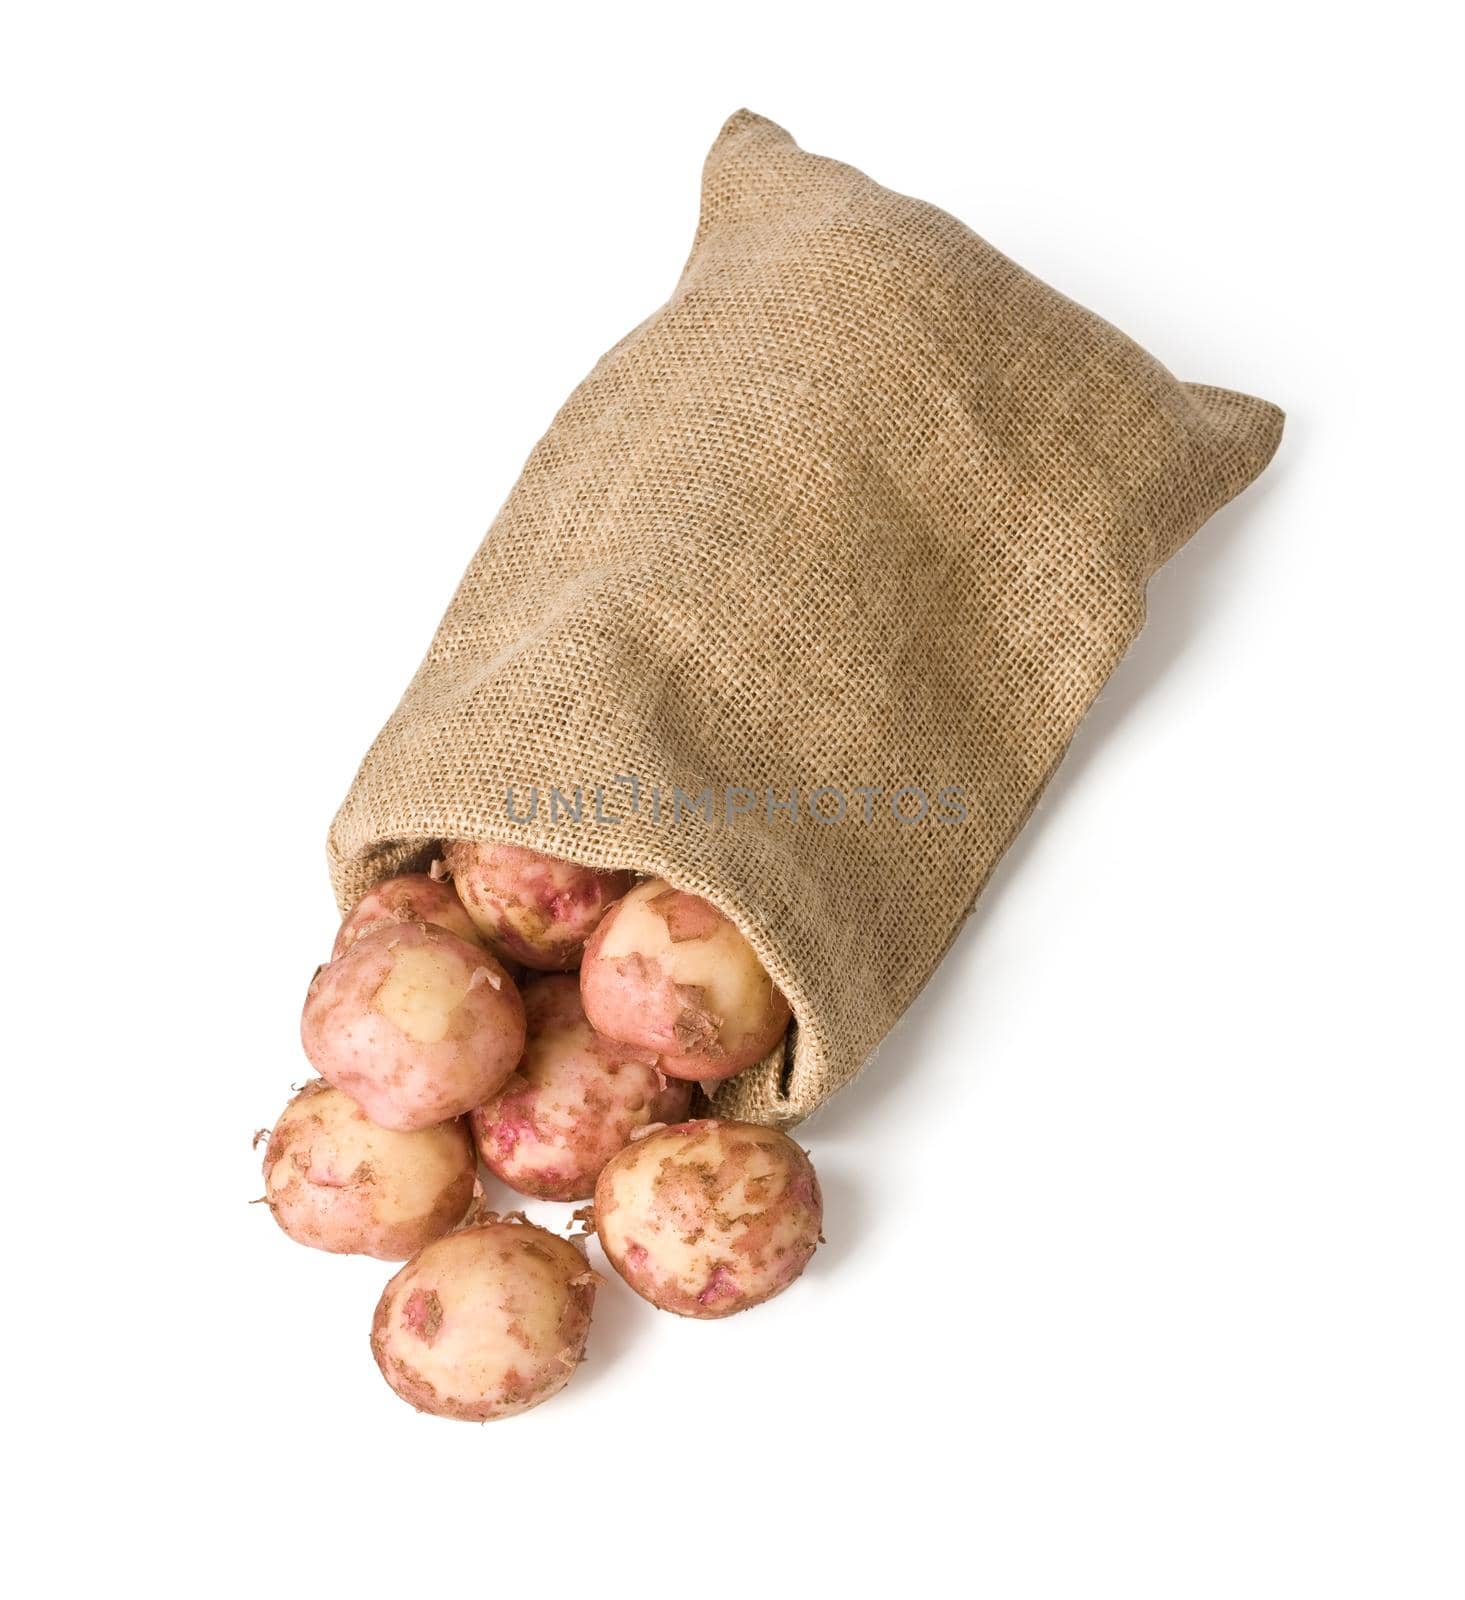 potatoes in burlap sack by kornienko